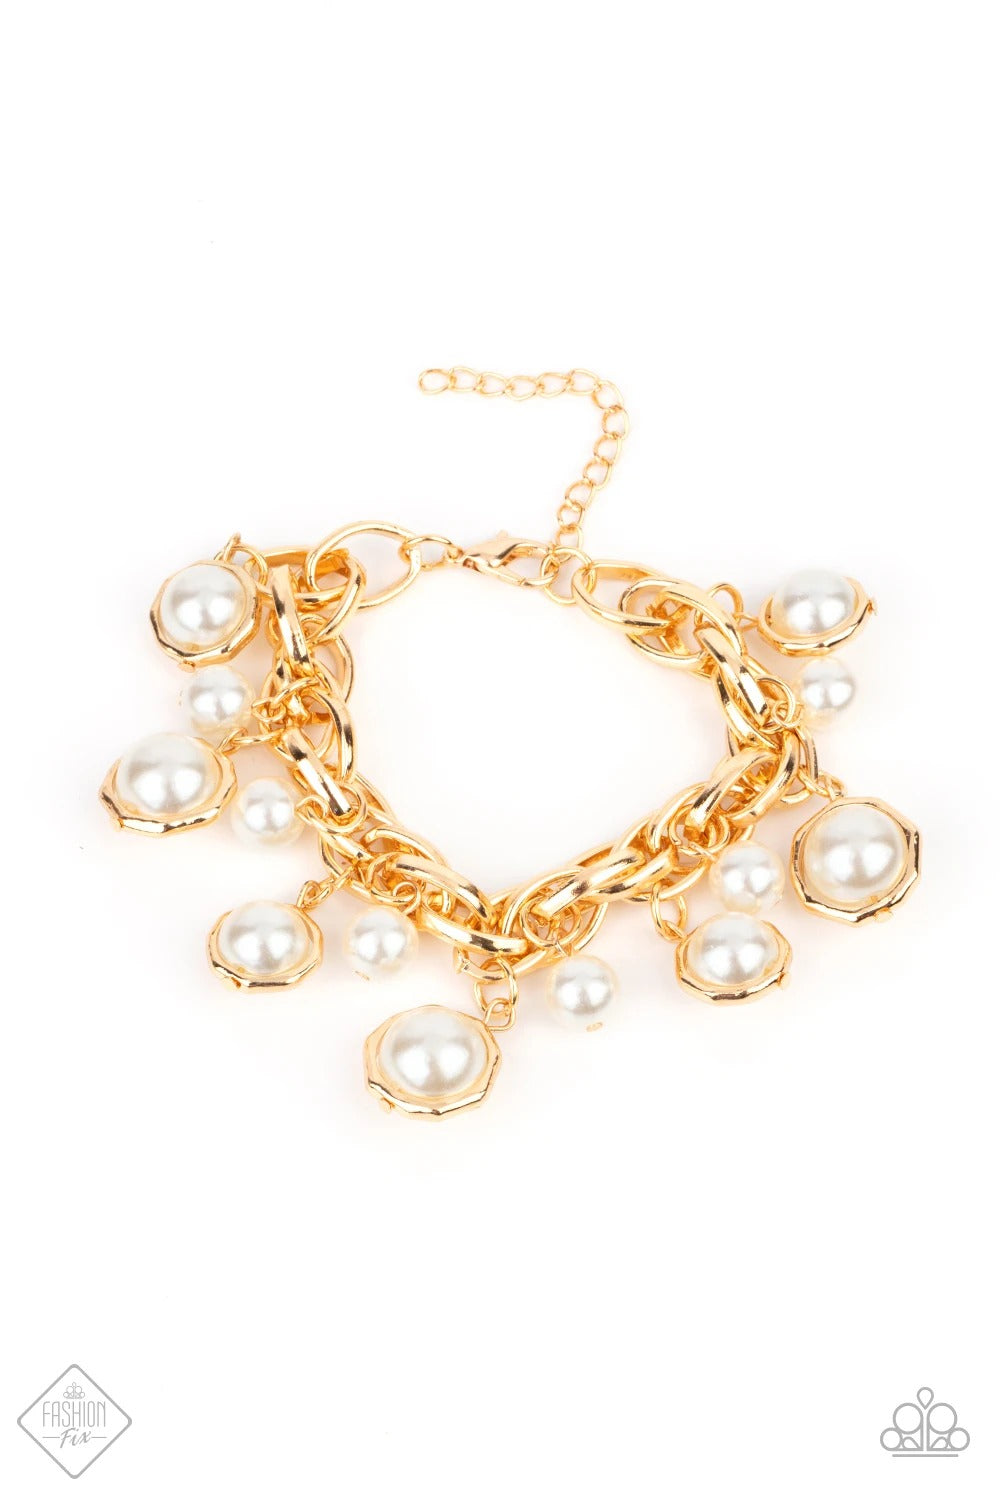 Paparazzi Orbiting Opulence Gold Clasp Bracelet - Fashion Fix Fiercely 5th Avenue August 2021